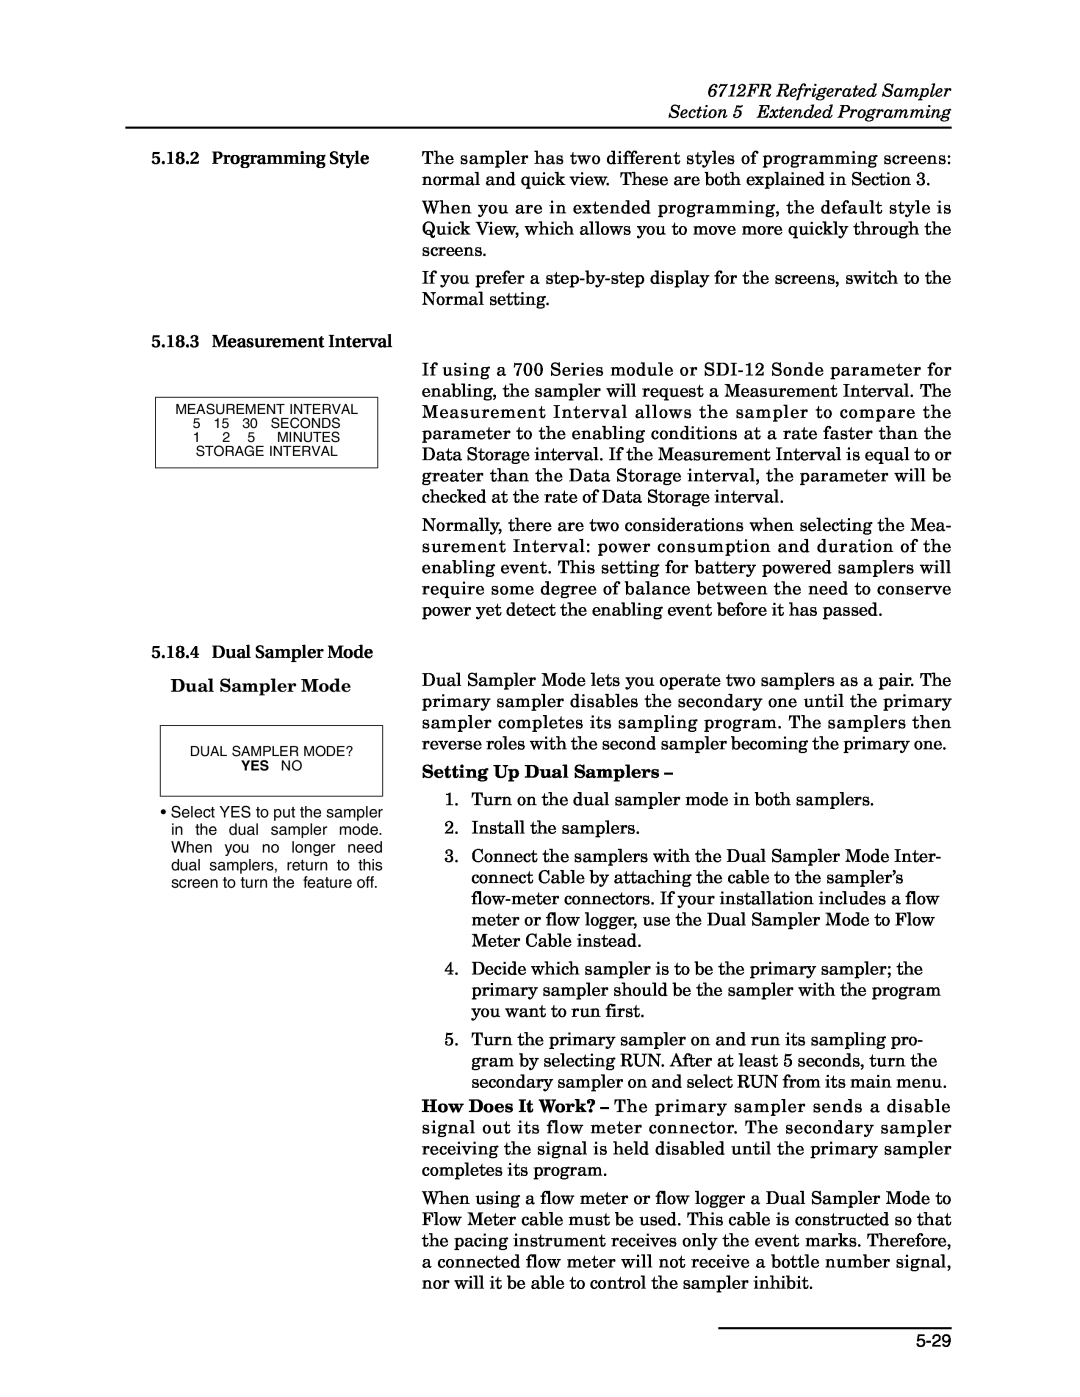 Teledyne manual 6712FR Refrigerated Sampler Extended Programming, Programming Style 5.18.3 Measurement Interval 